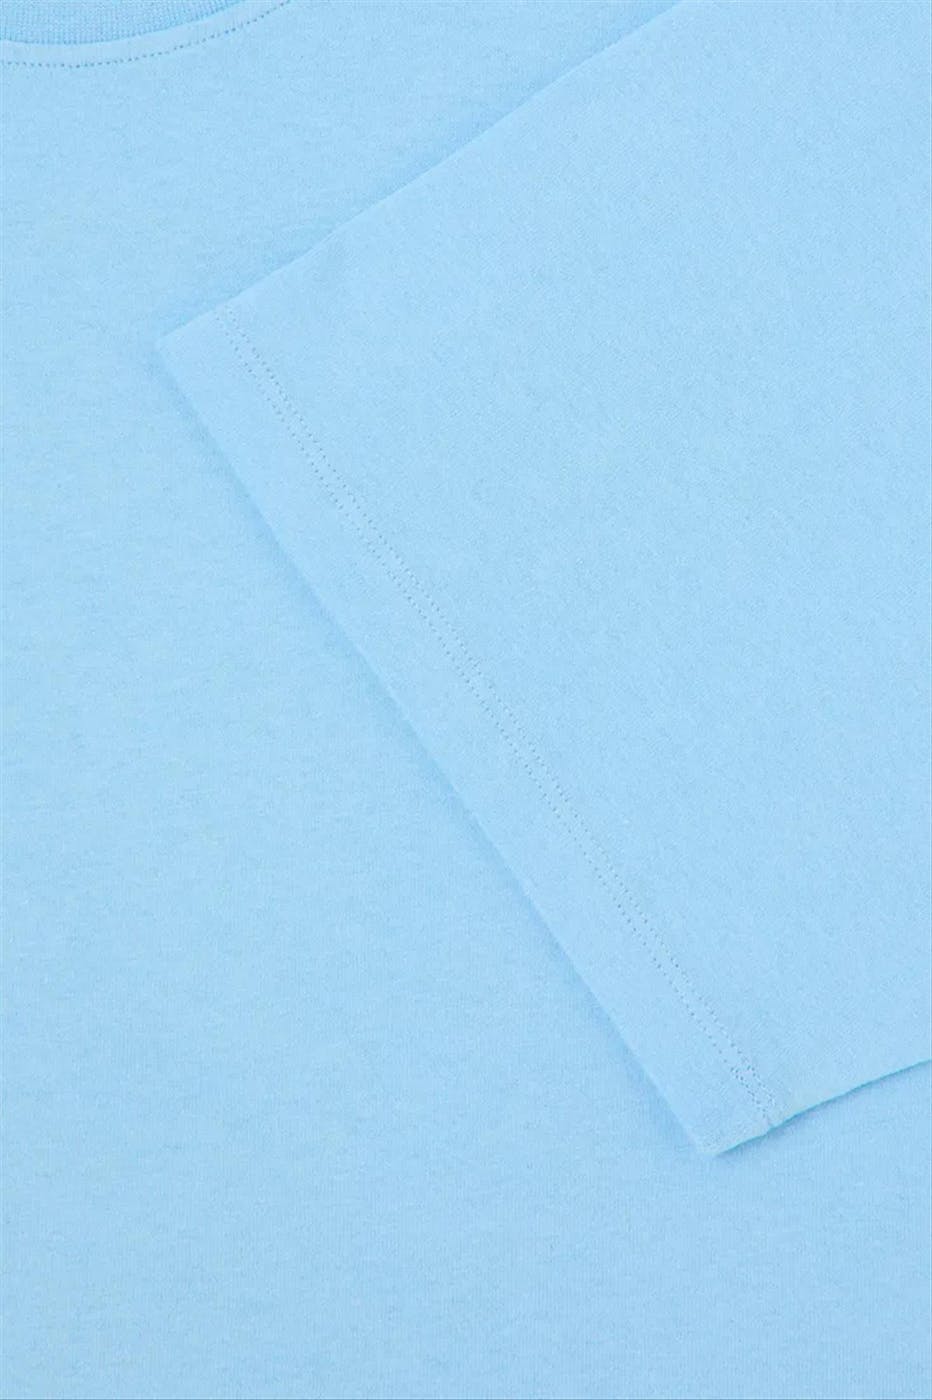 Edwin - Lichtblauwe Emanation T-shirt